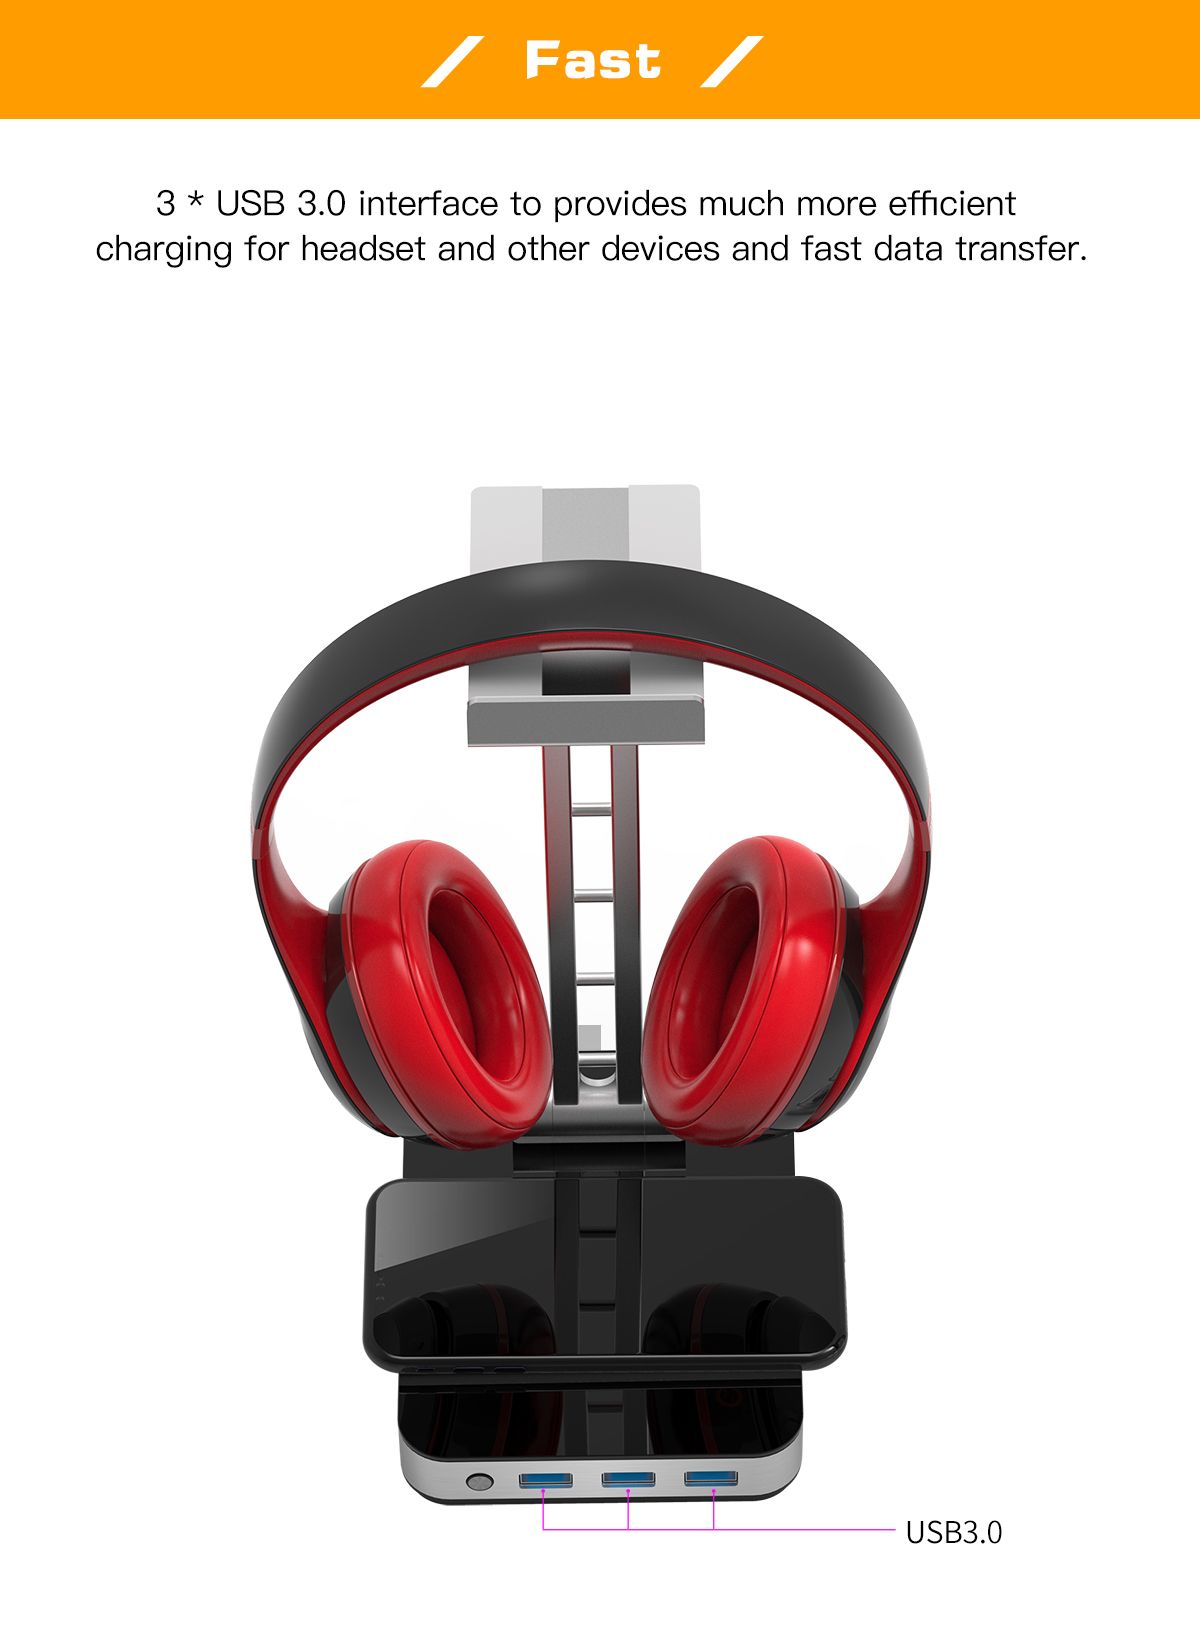 JIUSHARK-JSR-1-RGB-Headphone-Stand-Headset-Holder-with-3-USB-Ports-1-Type-c-Aluminum-Alloy-Multi-fun-1728124